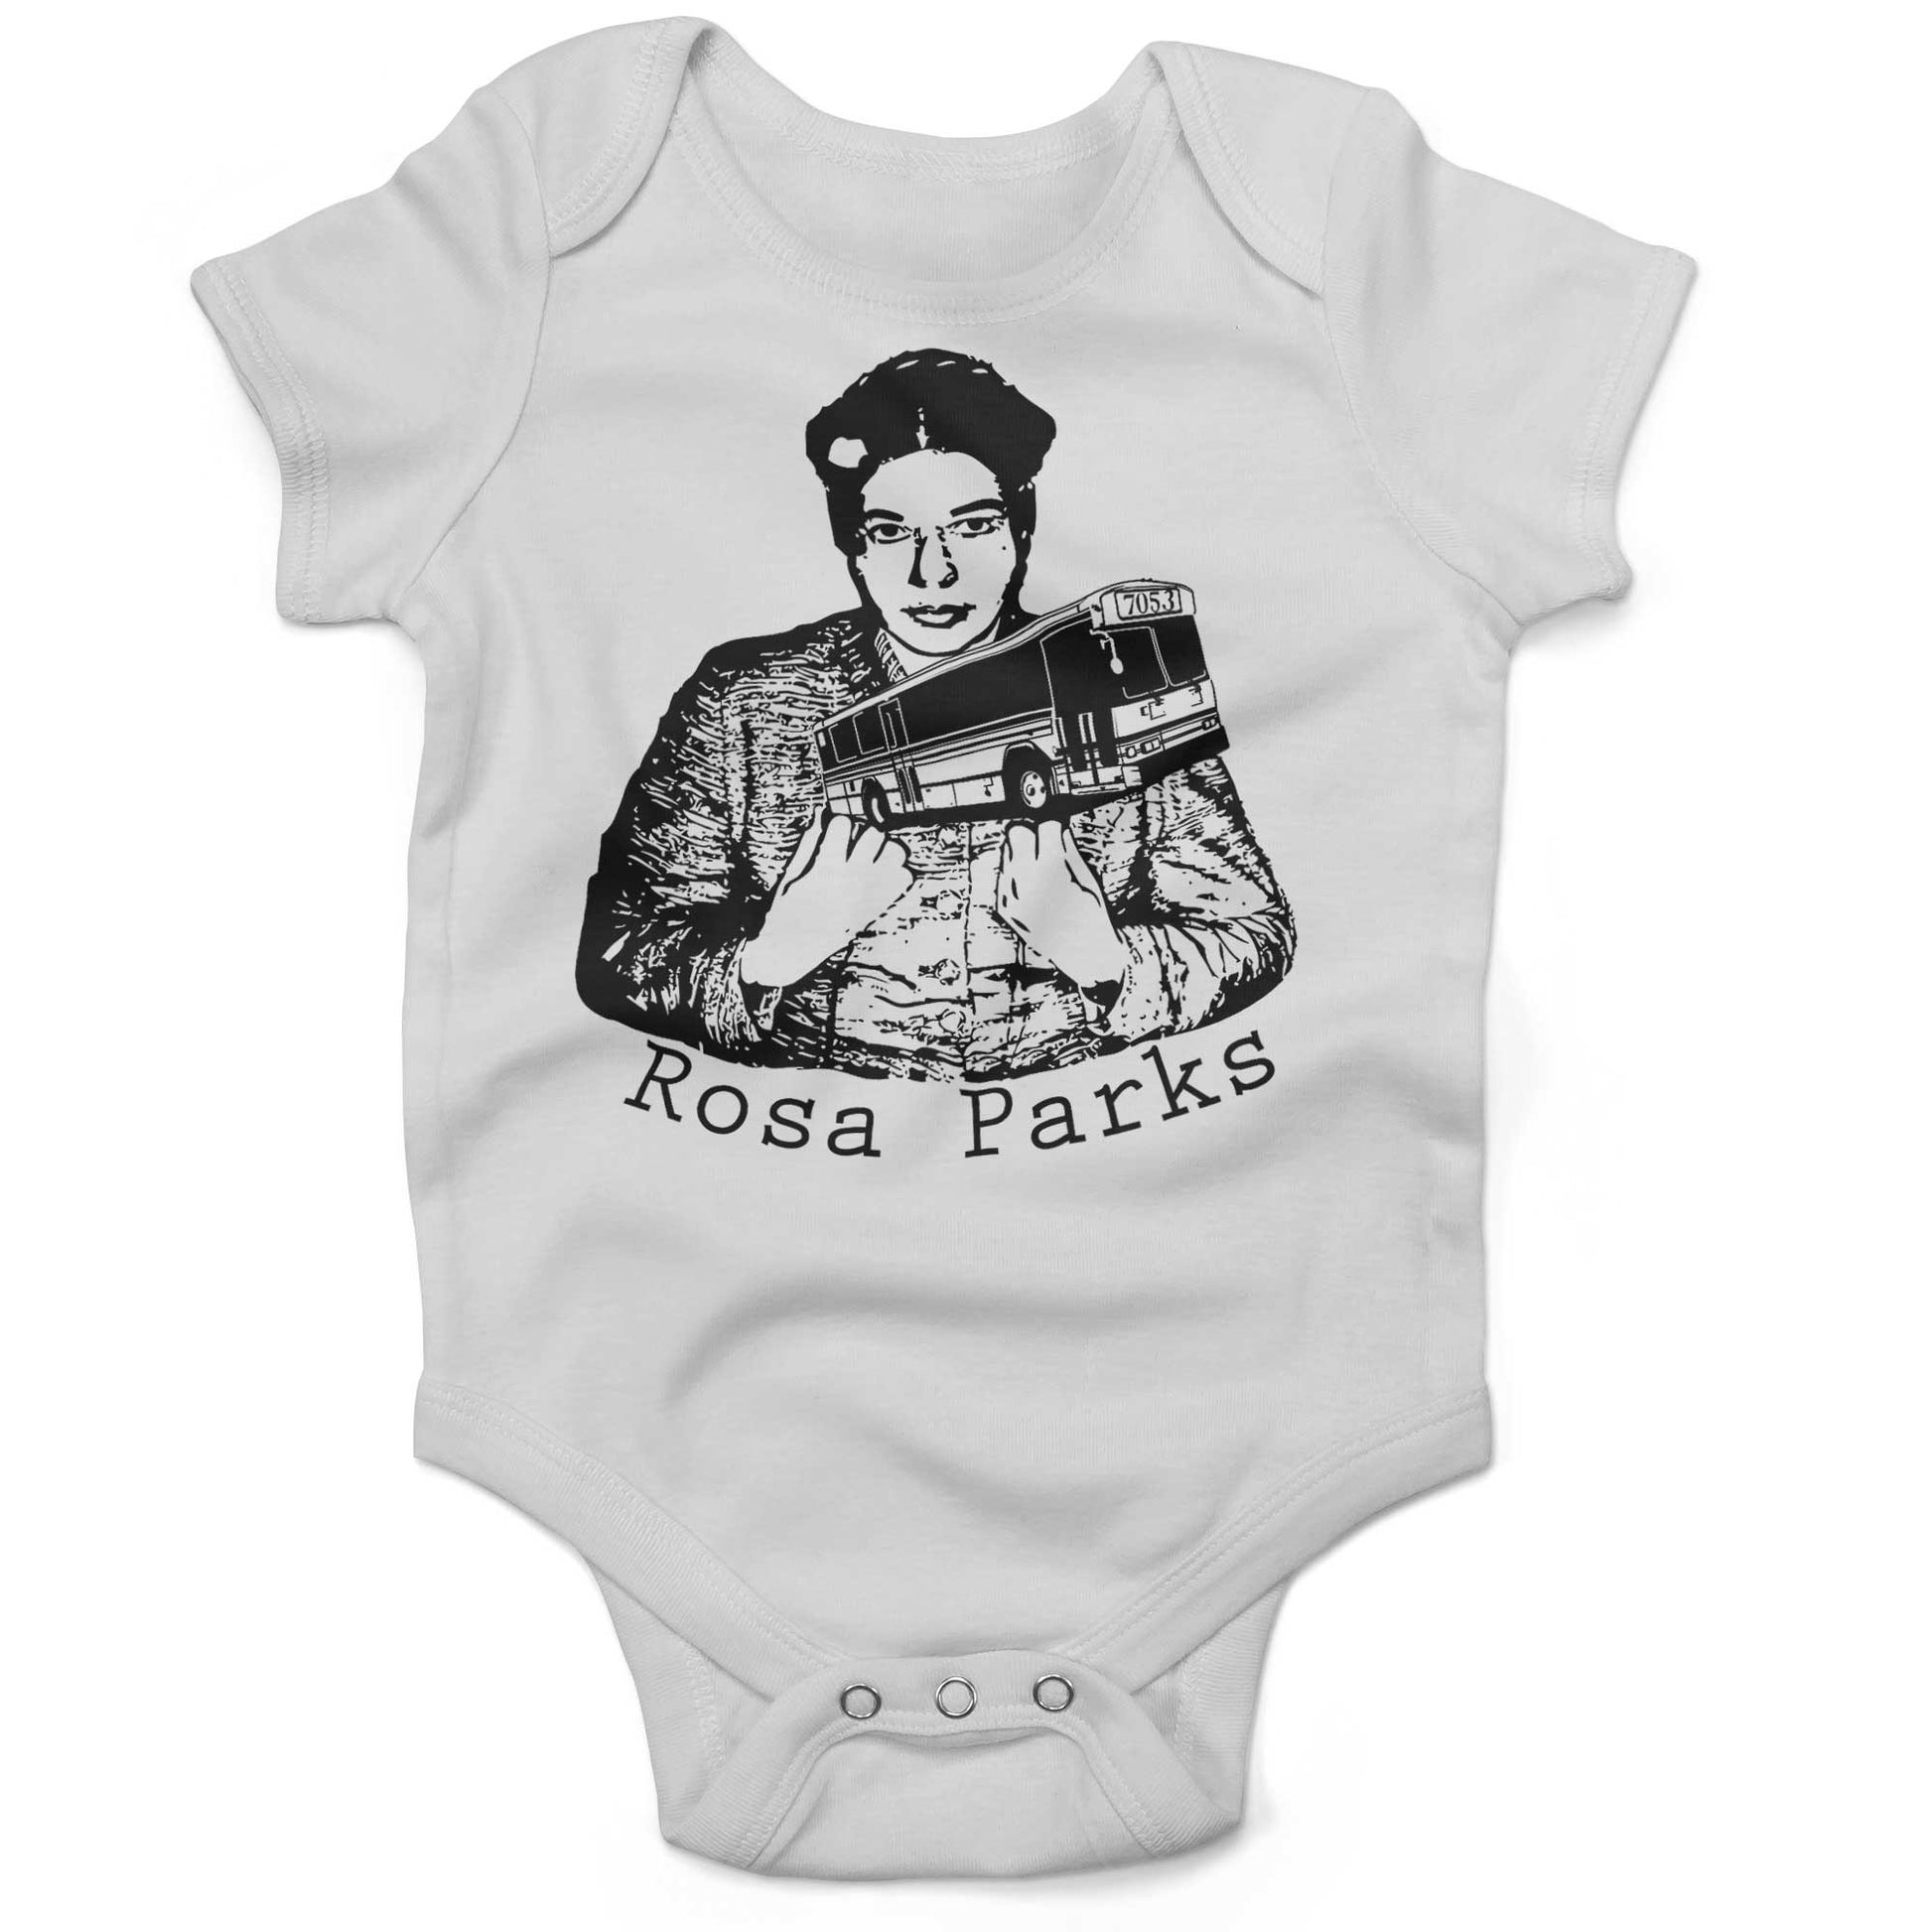 Rosa Parks Infant Bodysuit or Raglan Baby Tee-White-3-6 months